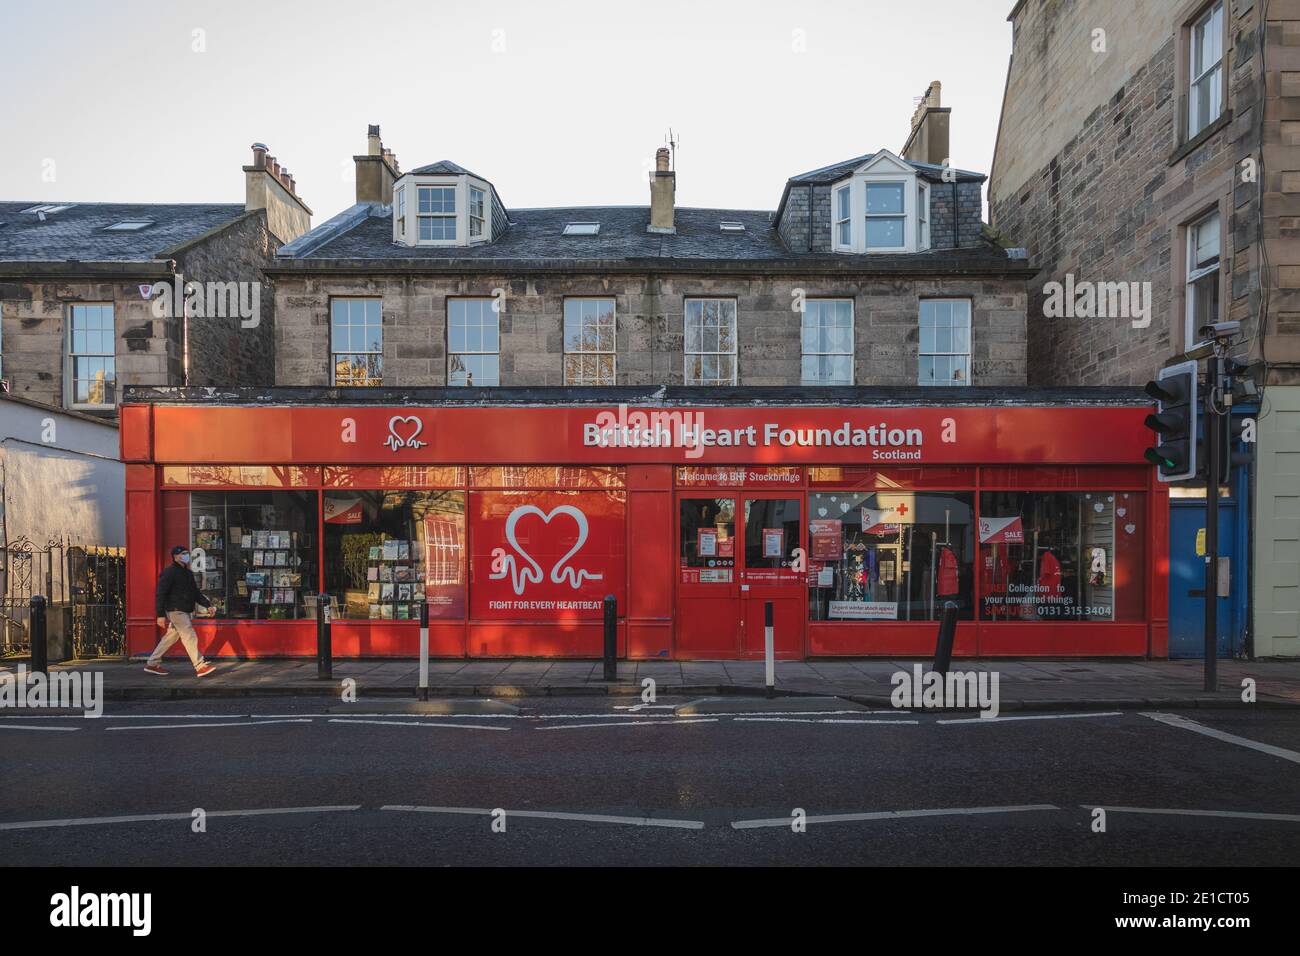 Edinburgh, Scotland - January 6 2021: The British Heart Foundation shopfront at Raeburn Place in Edinburgh, Scotland one of many charity shops in the Stock Photo